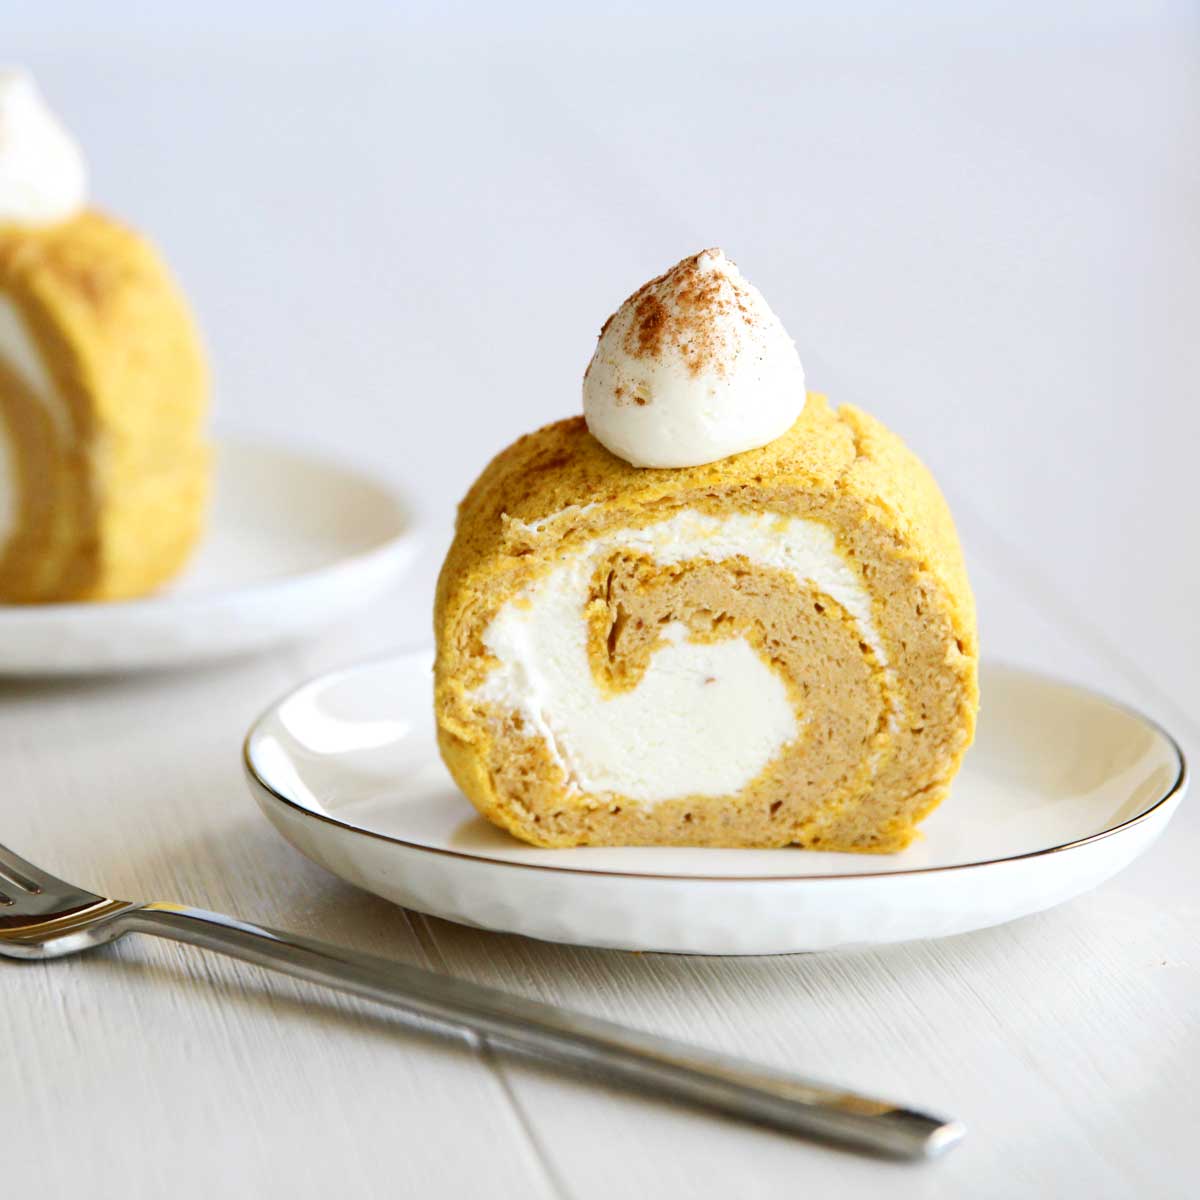 Fall in Love Flourless Pumpkin Roll Cake (The Best Gluten Free Dessert Recipe!) - Brown Sugar Whipped Cream